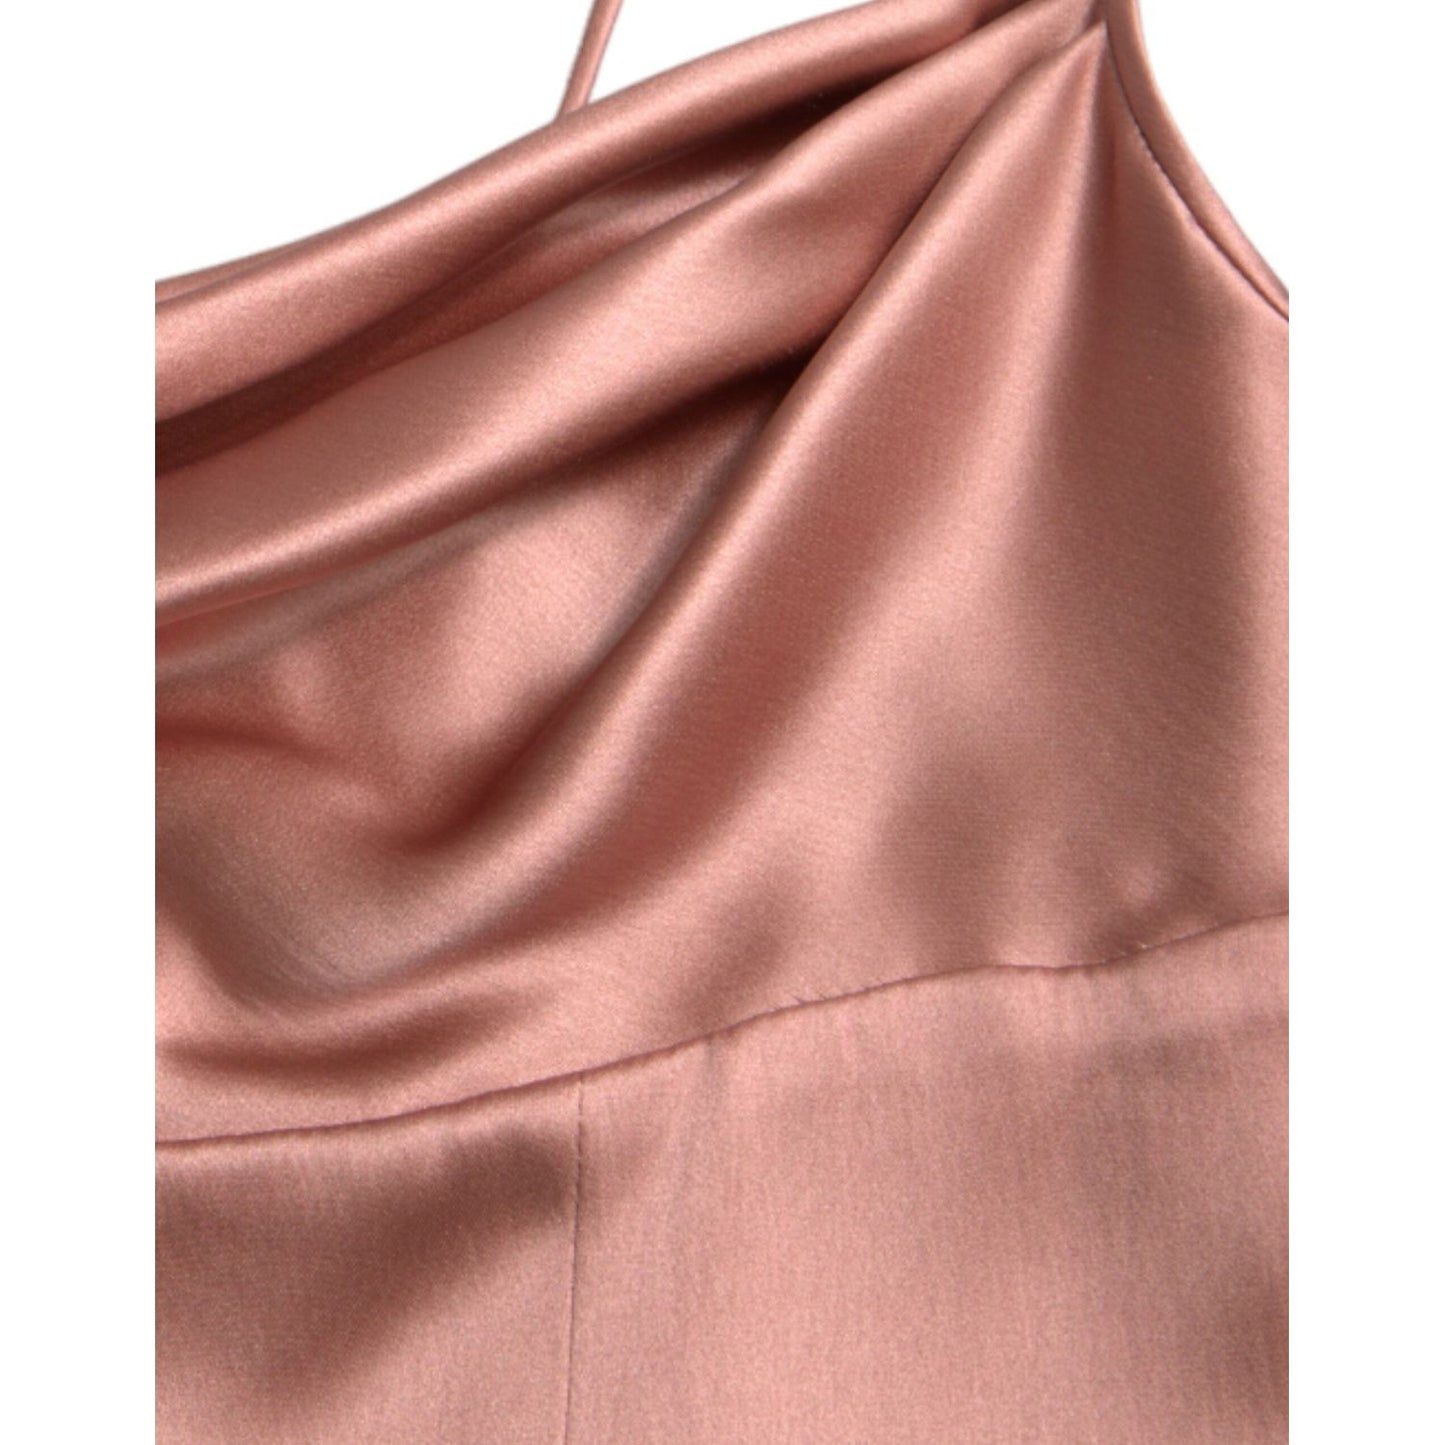 Dolce & Gabbana Elegant Long Silk Gown in Pink pink-silk-spaghetti-straps-long-gown-dress